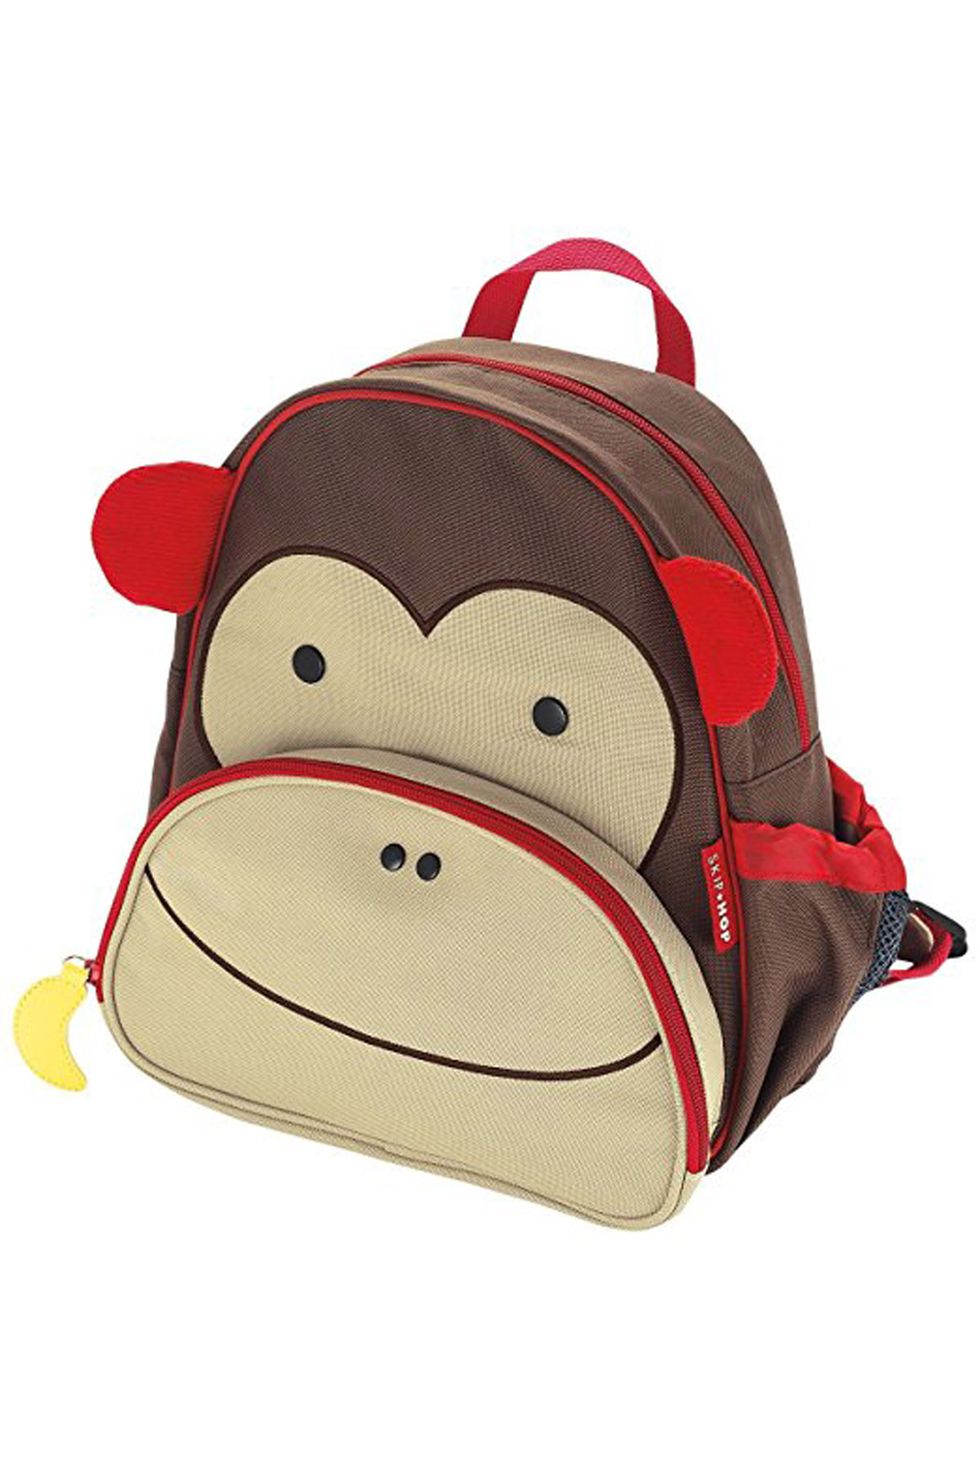 monkey backpack